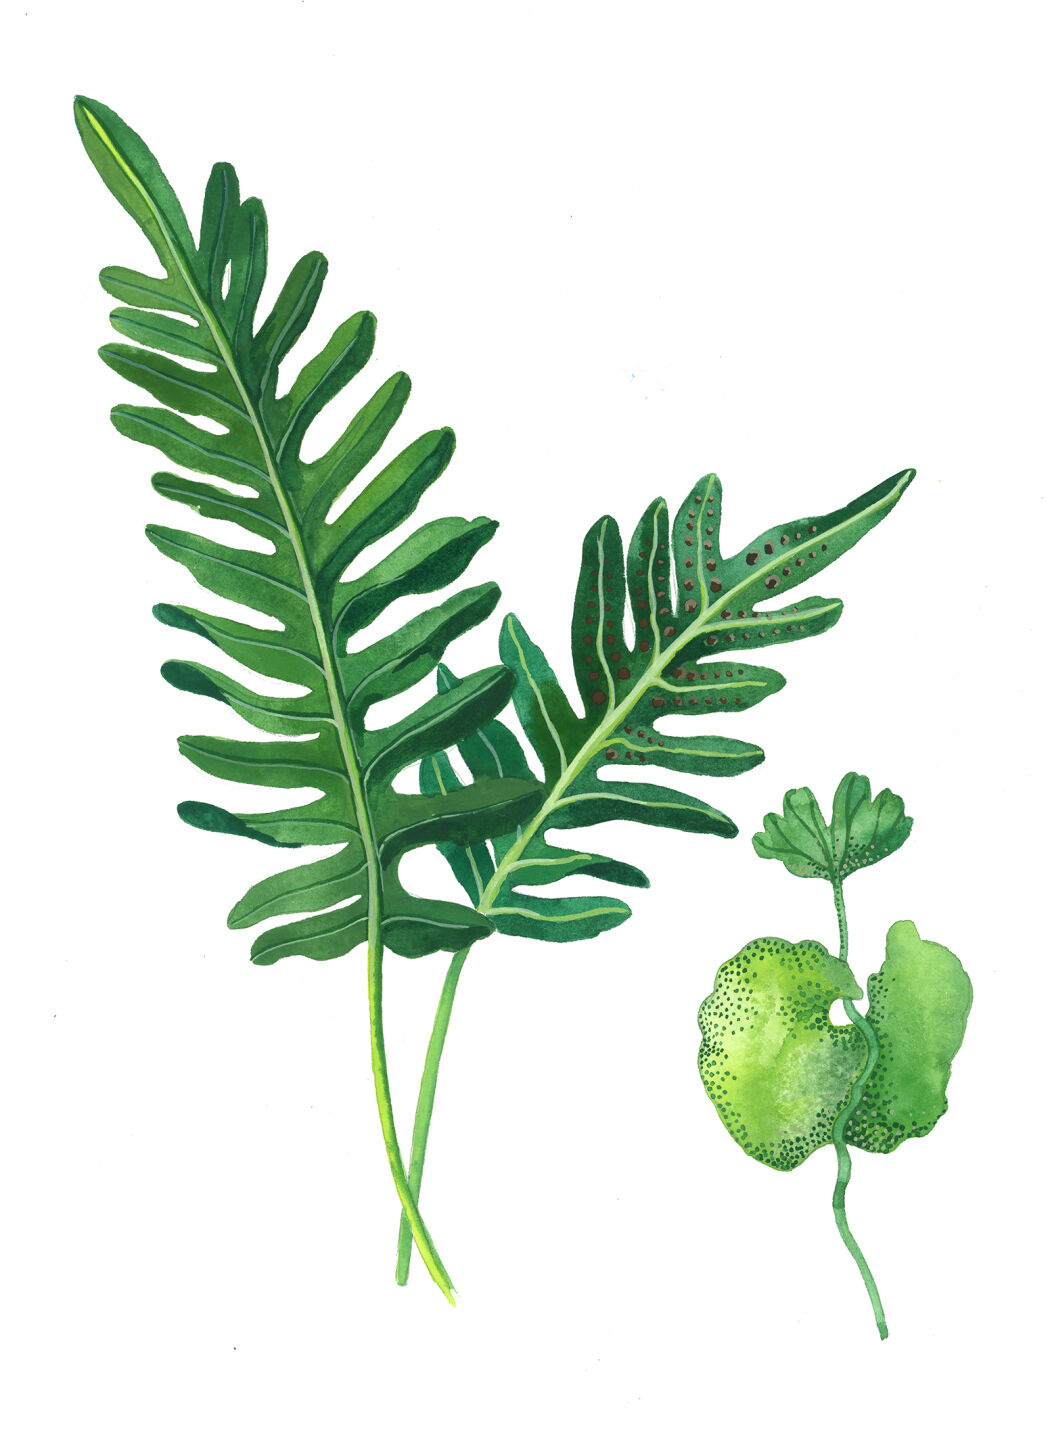 Botanical illustration by Malin Gyllensvaan